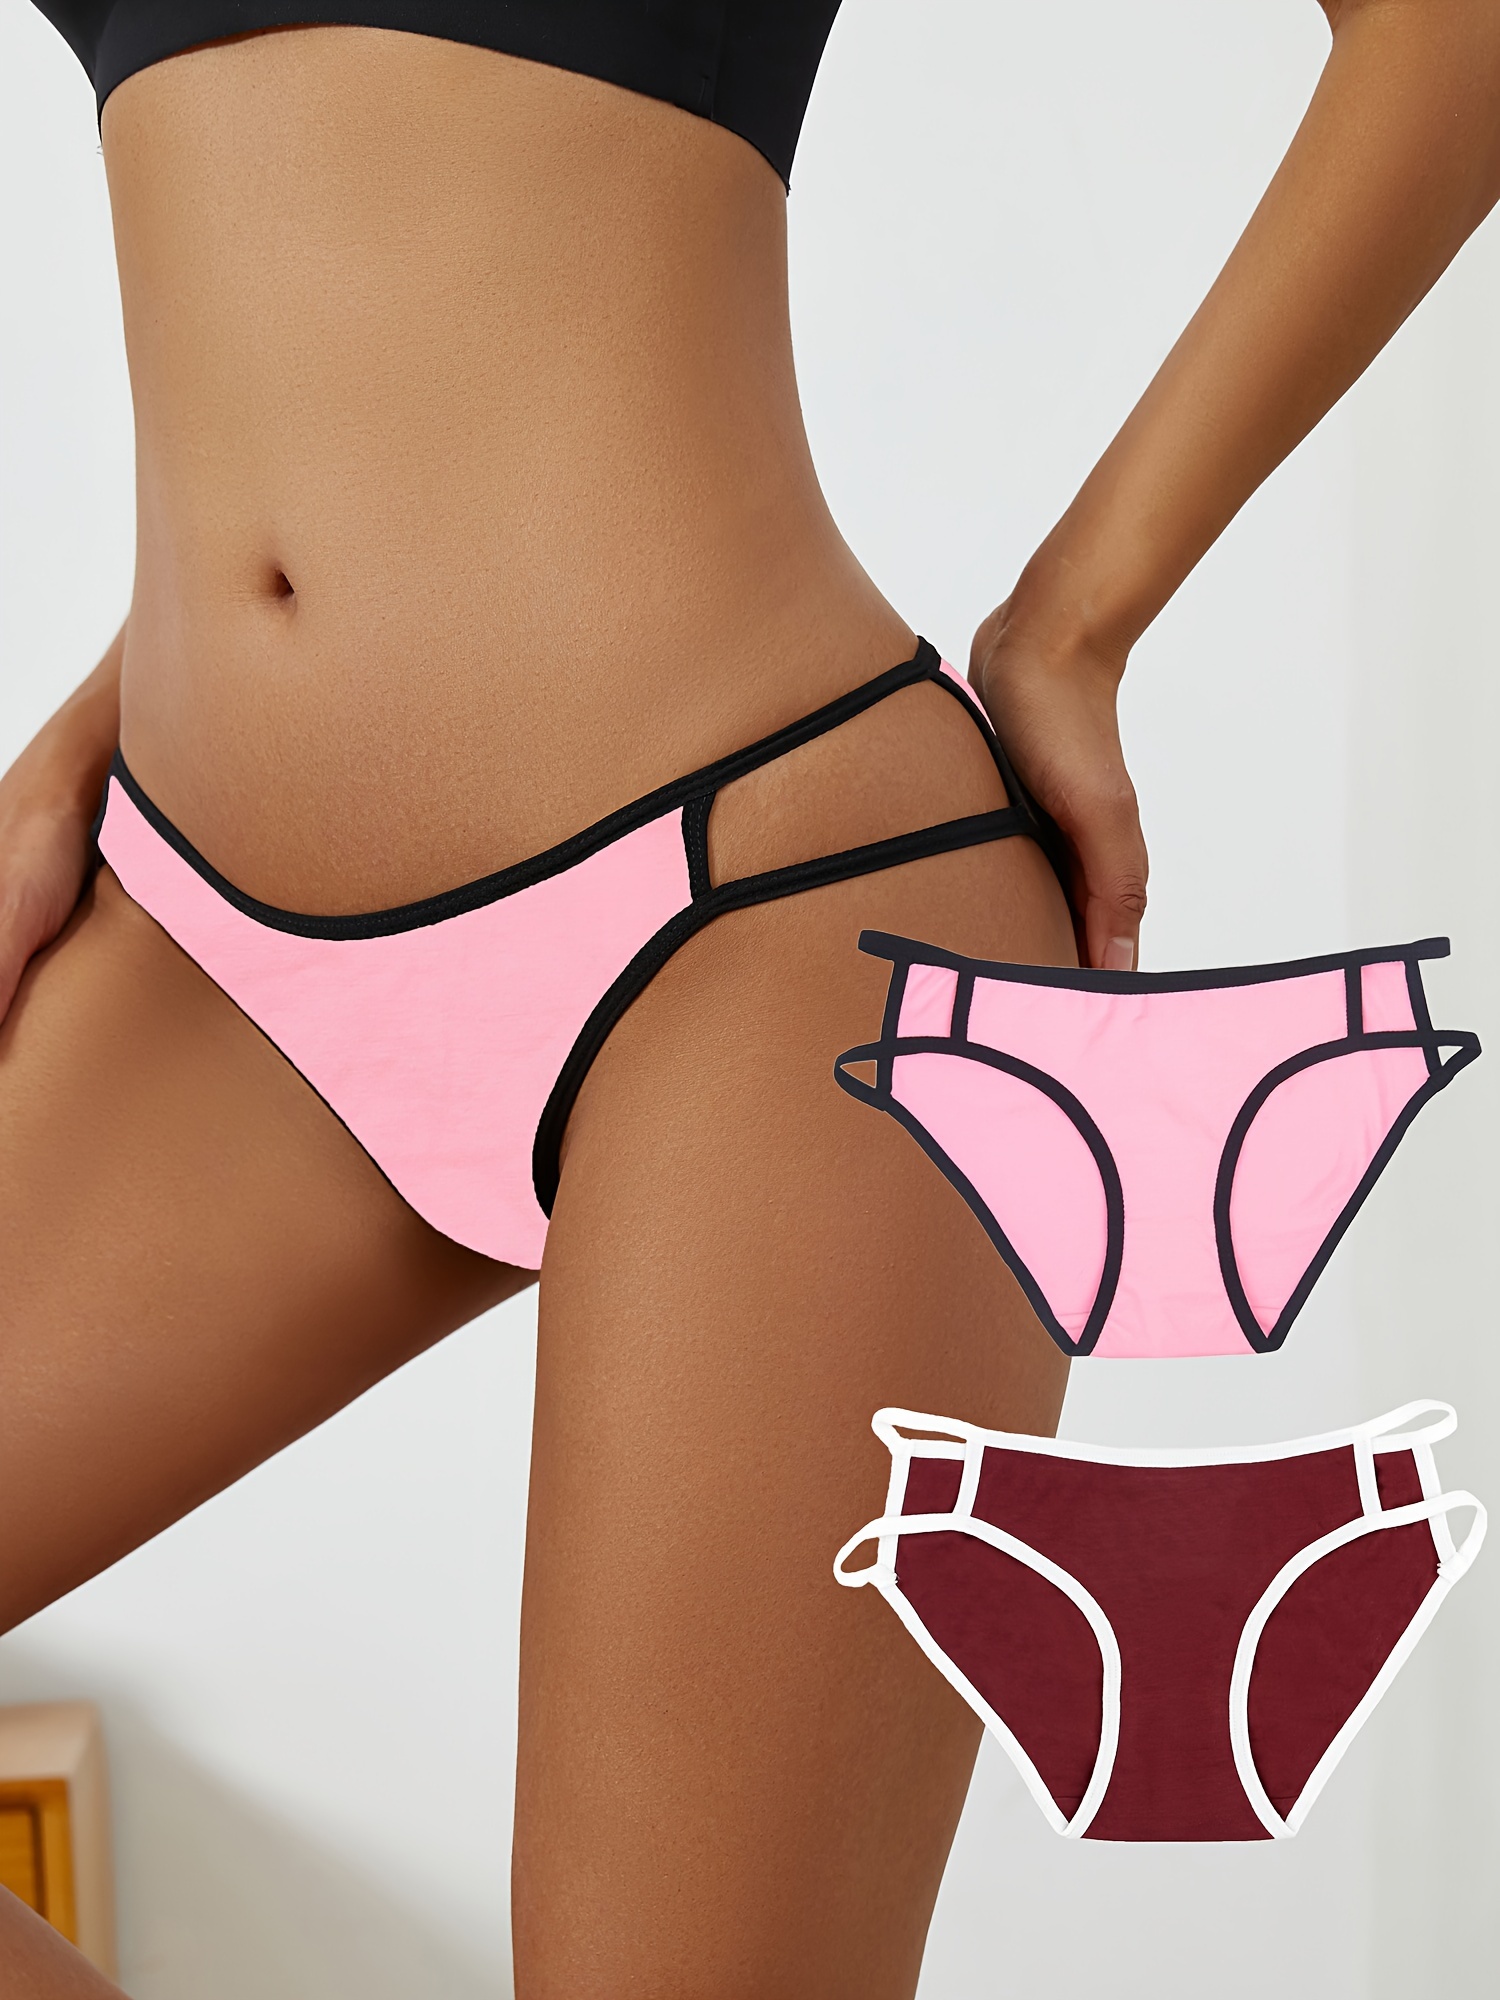 Wealurre Womens Comfort Cotton High Waist Underwear Breathable Soft Tummy  Control Bikini Panties Plus Size